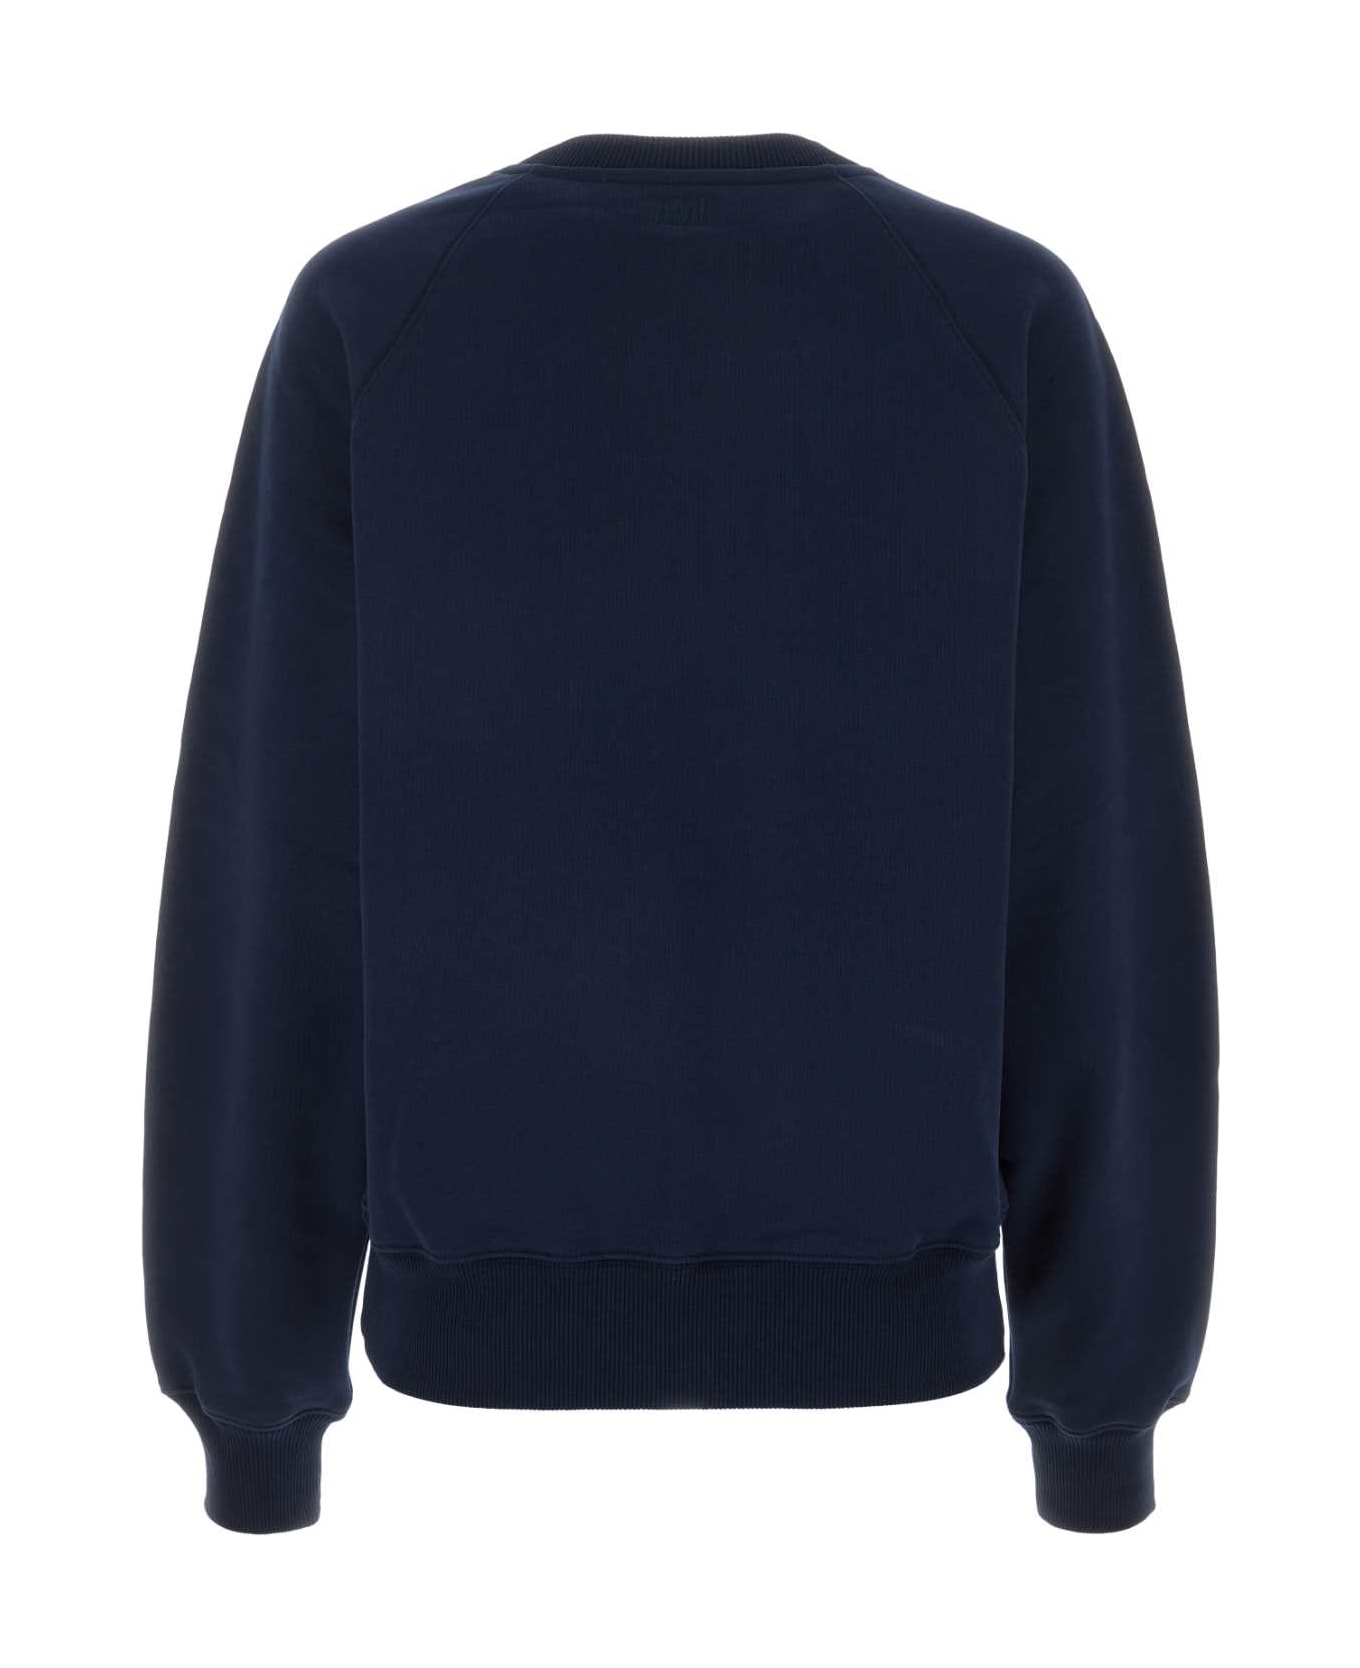 Ami Alexandre Mattiussi Navy Blue Cotton Sweatshirt - NIGHTBLUE